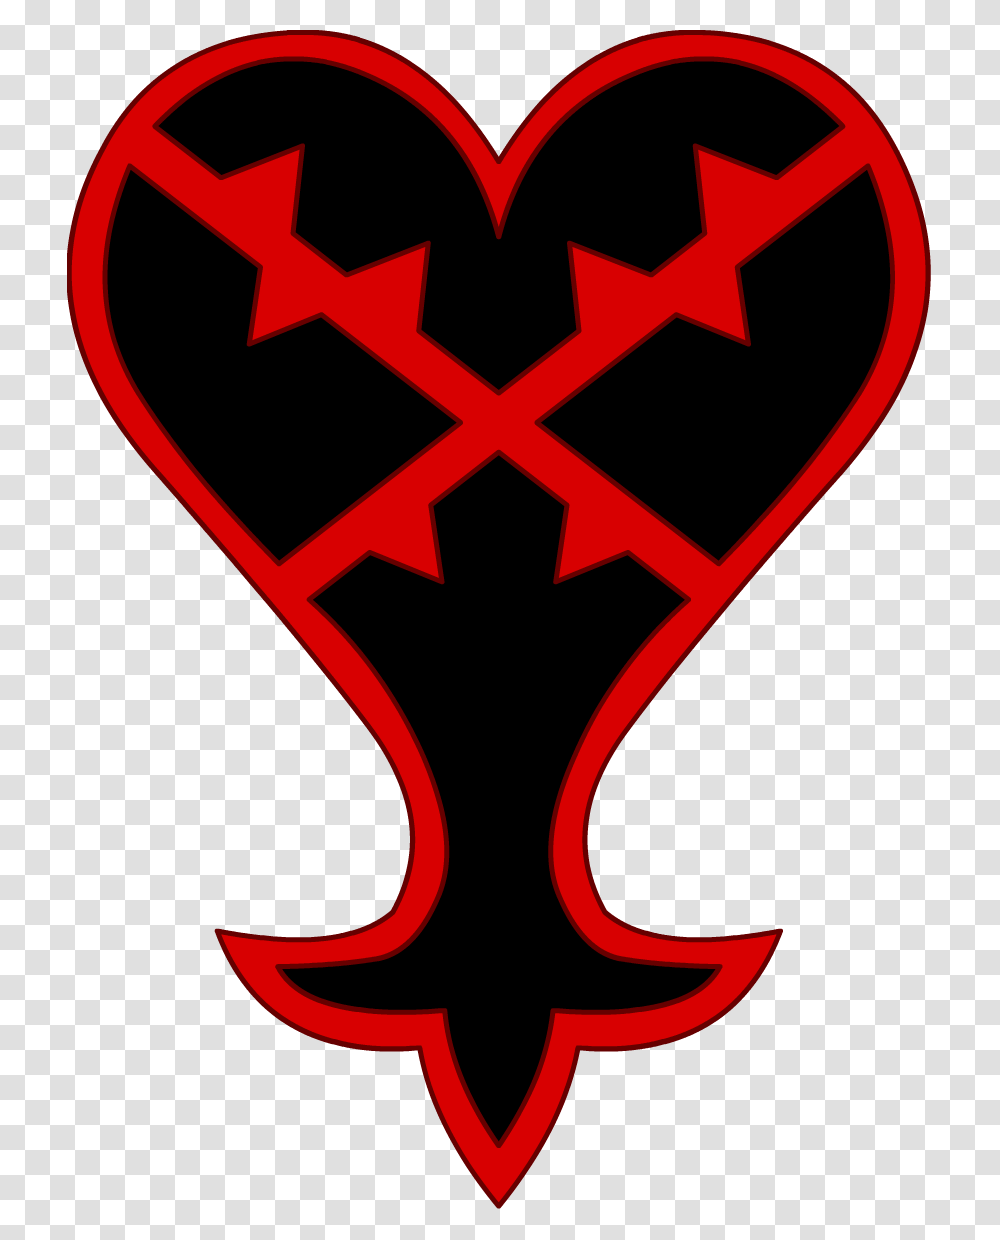 Heartless Kingdom Hearts Heartless Symbol, Emblem, Dynamite, Bomb, Weapon Transparent Png